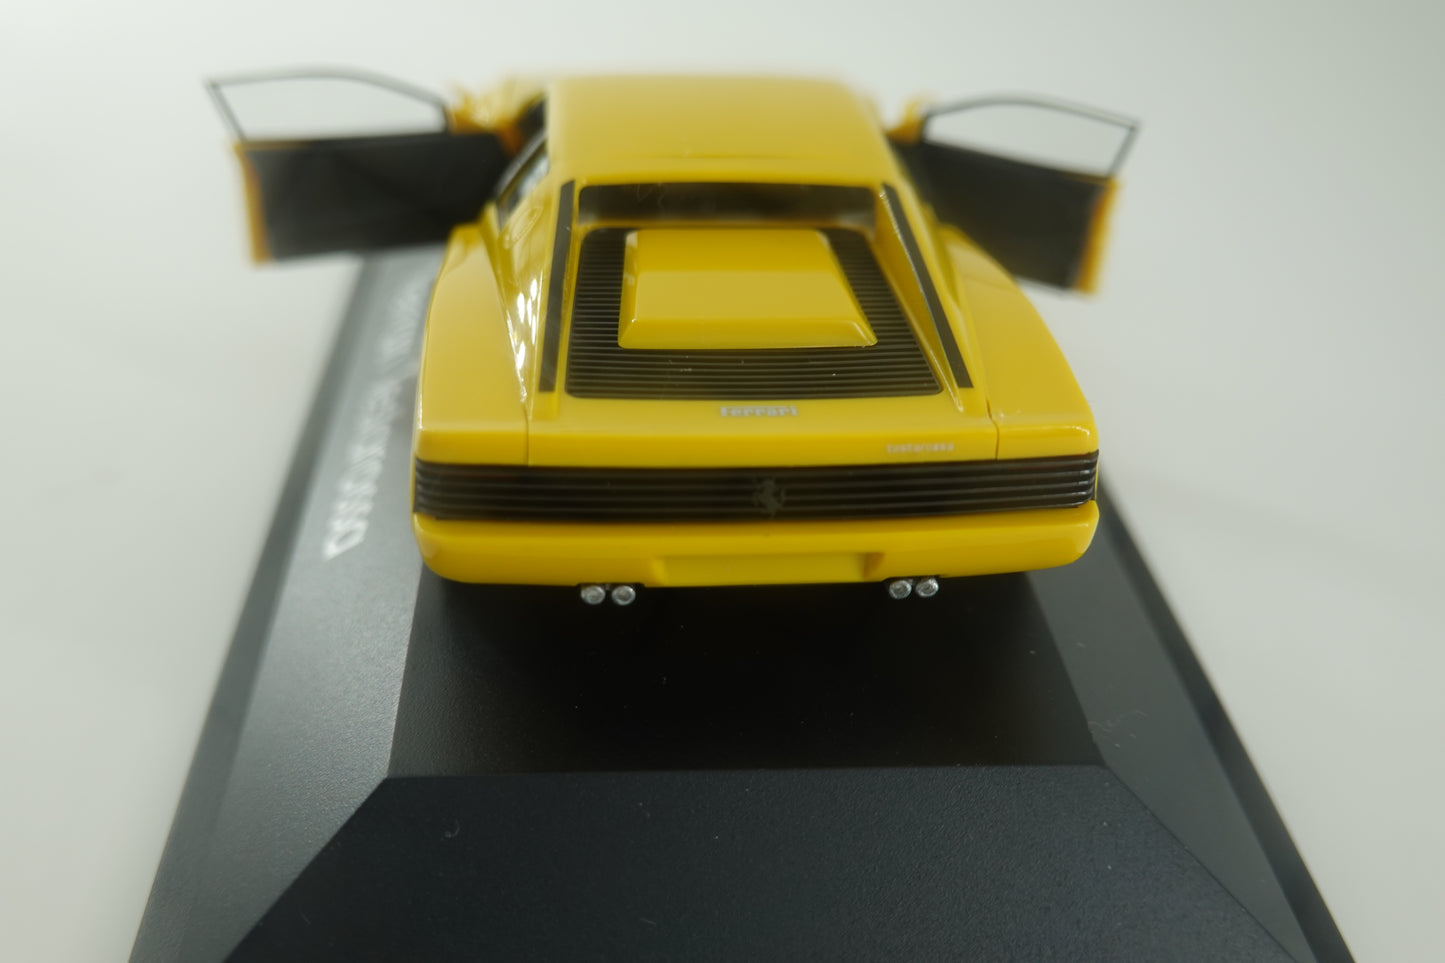 22oz Pelican Tumbler + Ferrari Model Car + Books - Sunny Adventure Gift Set for Car Lovers (Limited Edition)